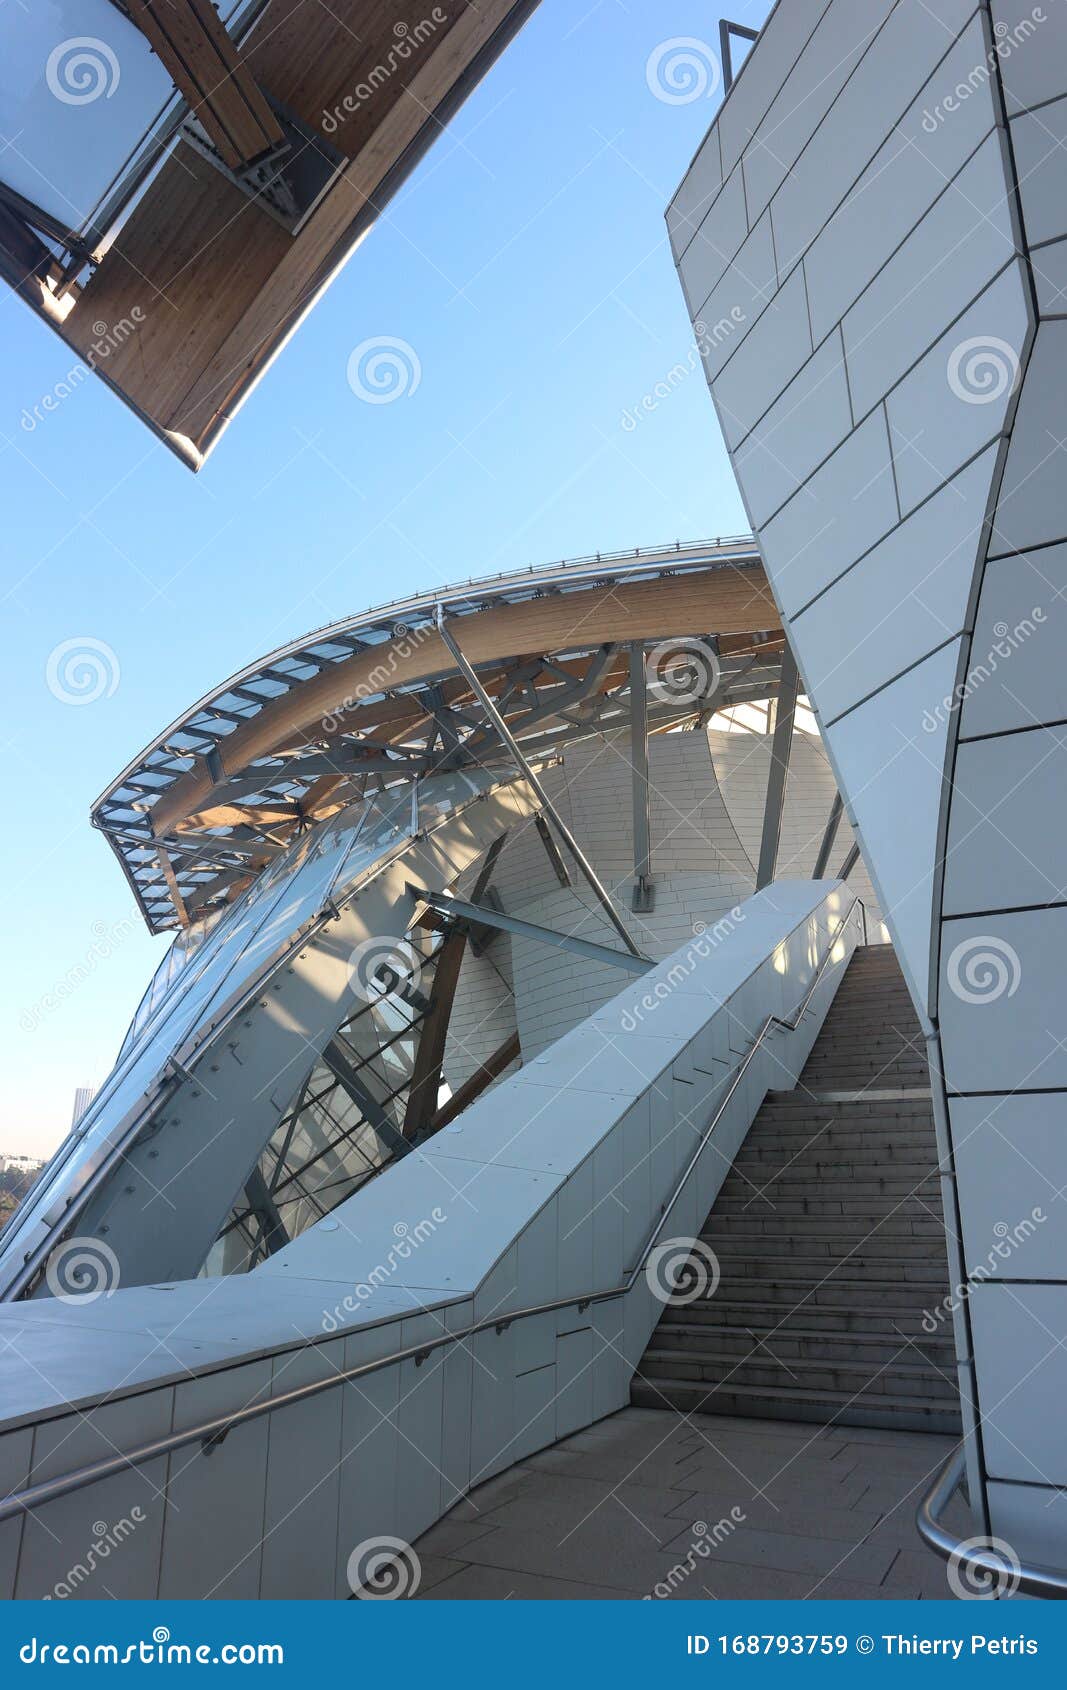 Preview of Frank Gehry's Paris Museum, Fondation Louis Vuitton